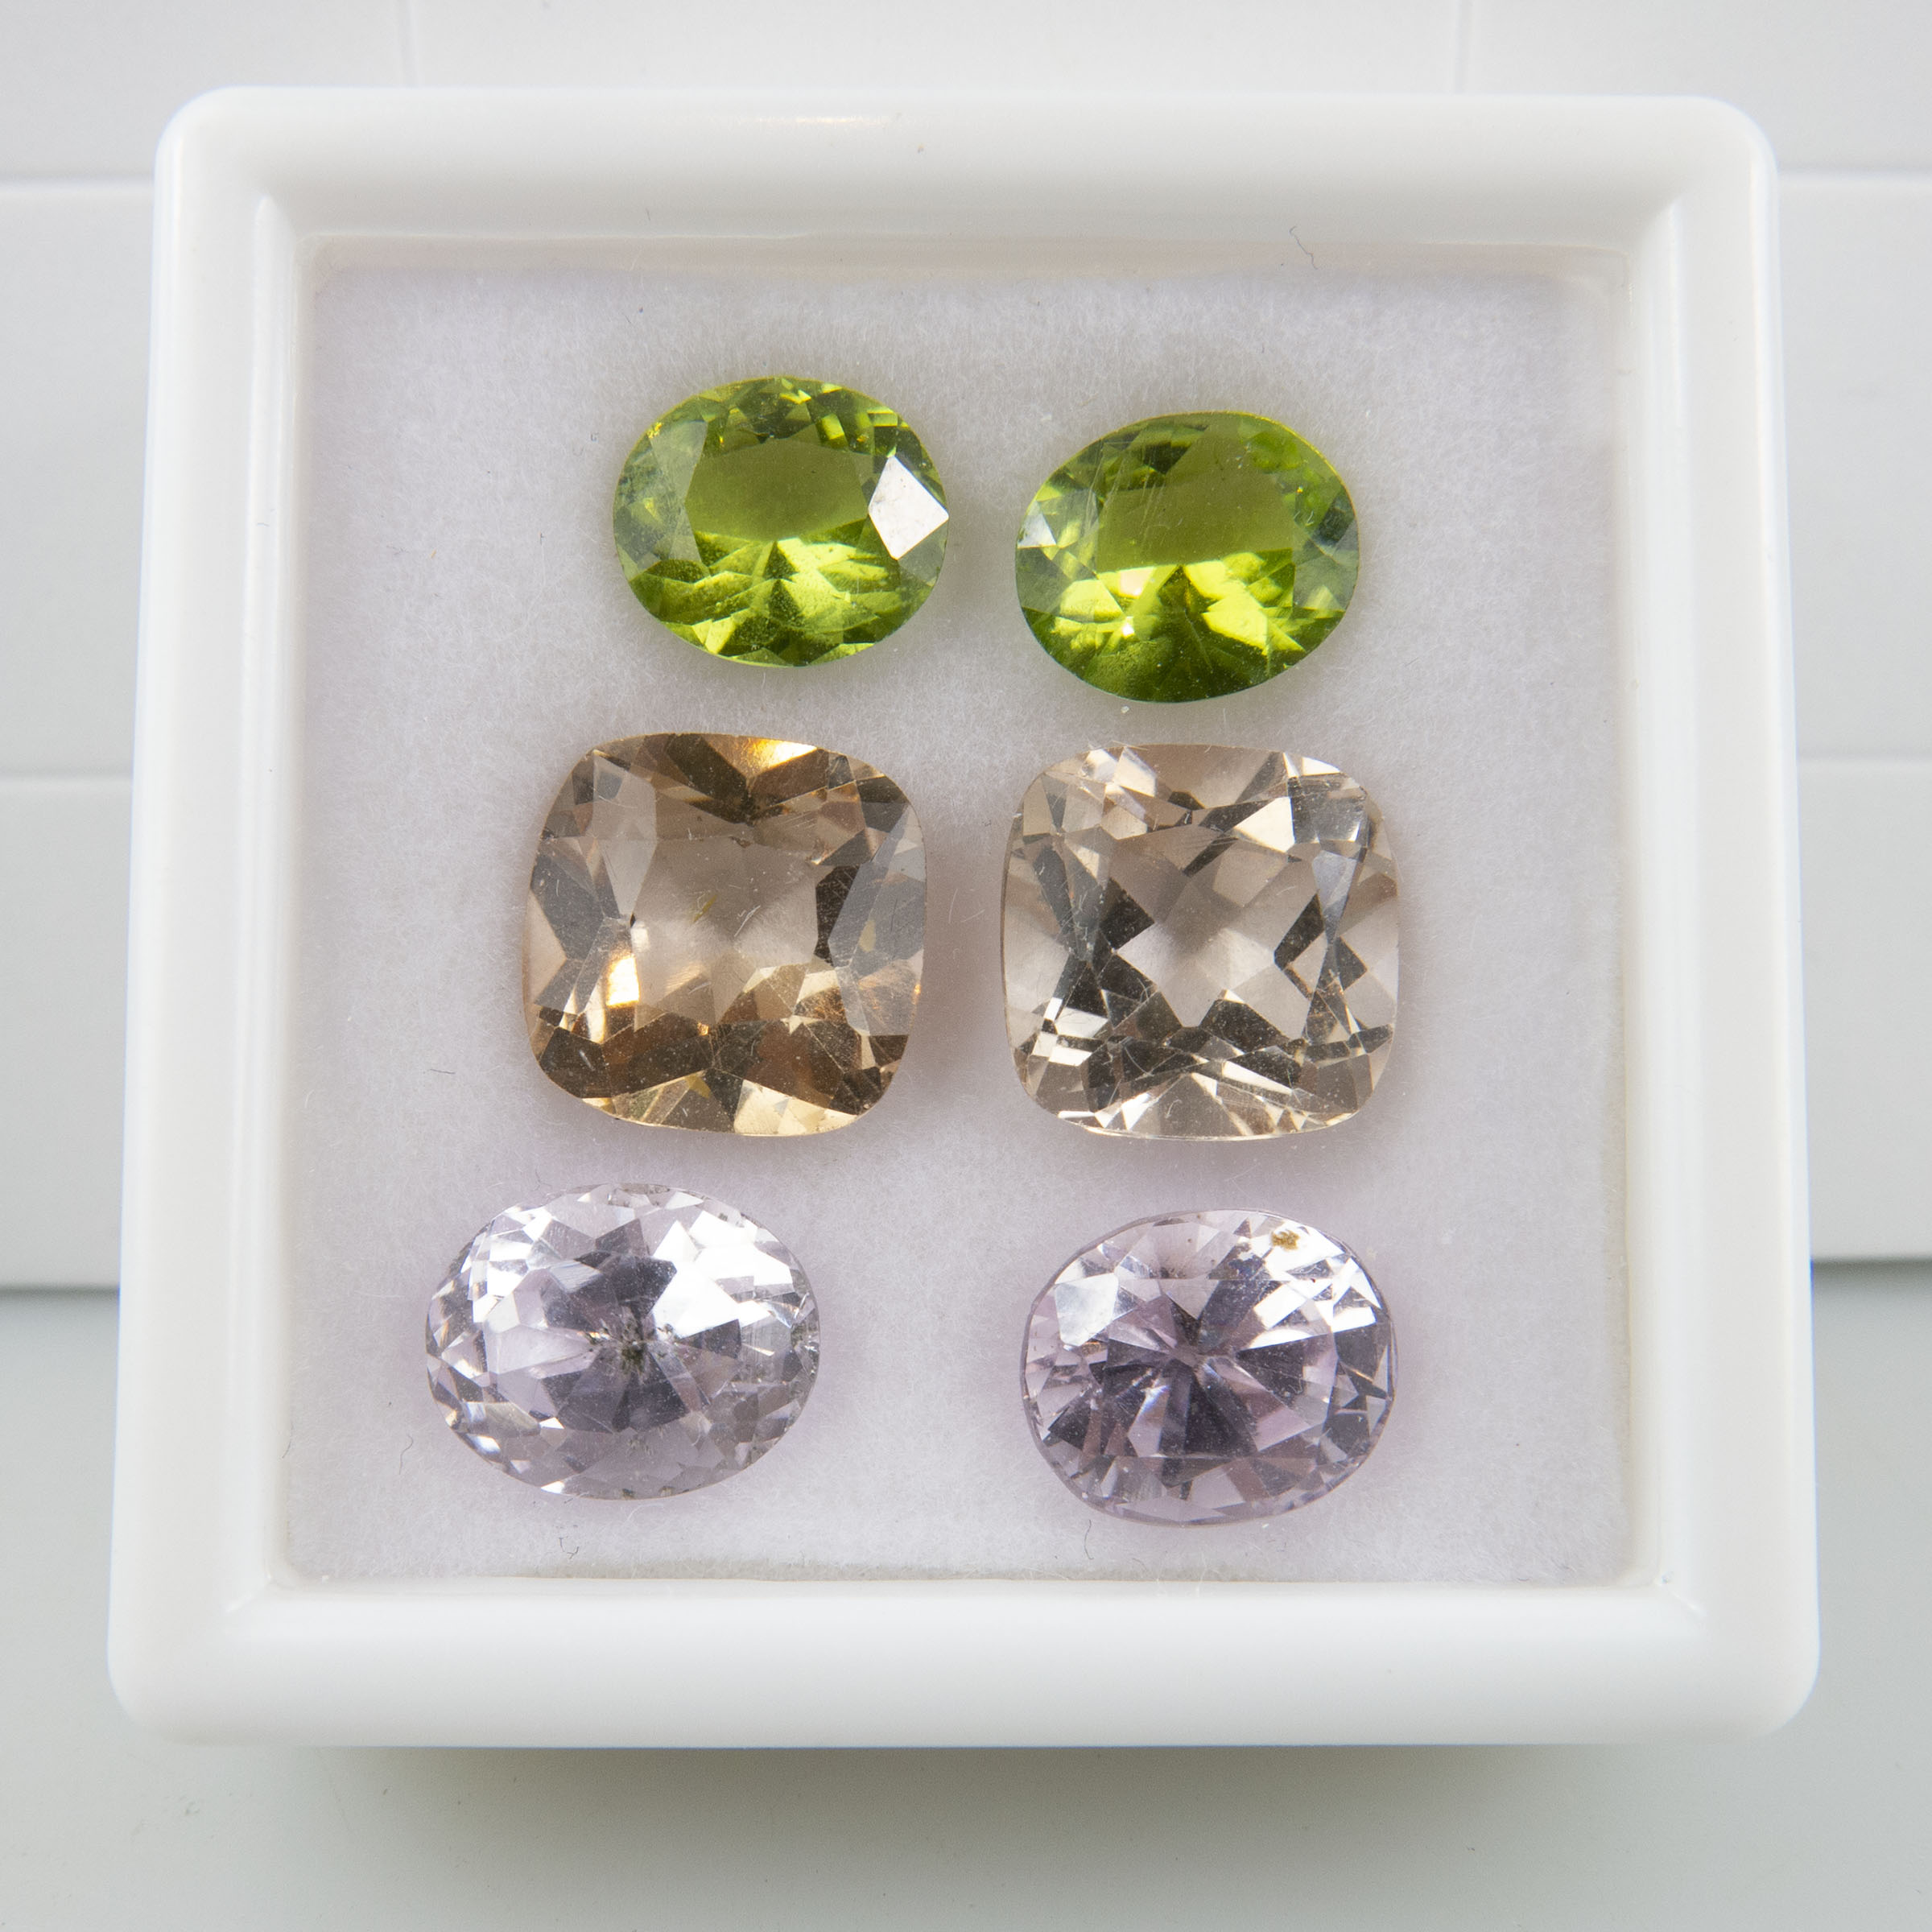 10 Pairs Of Various Cut Gemstones